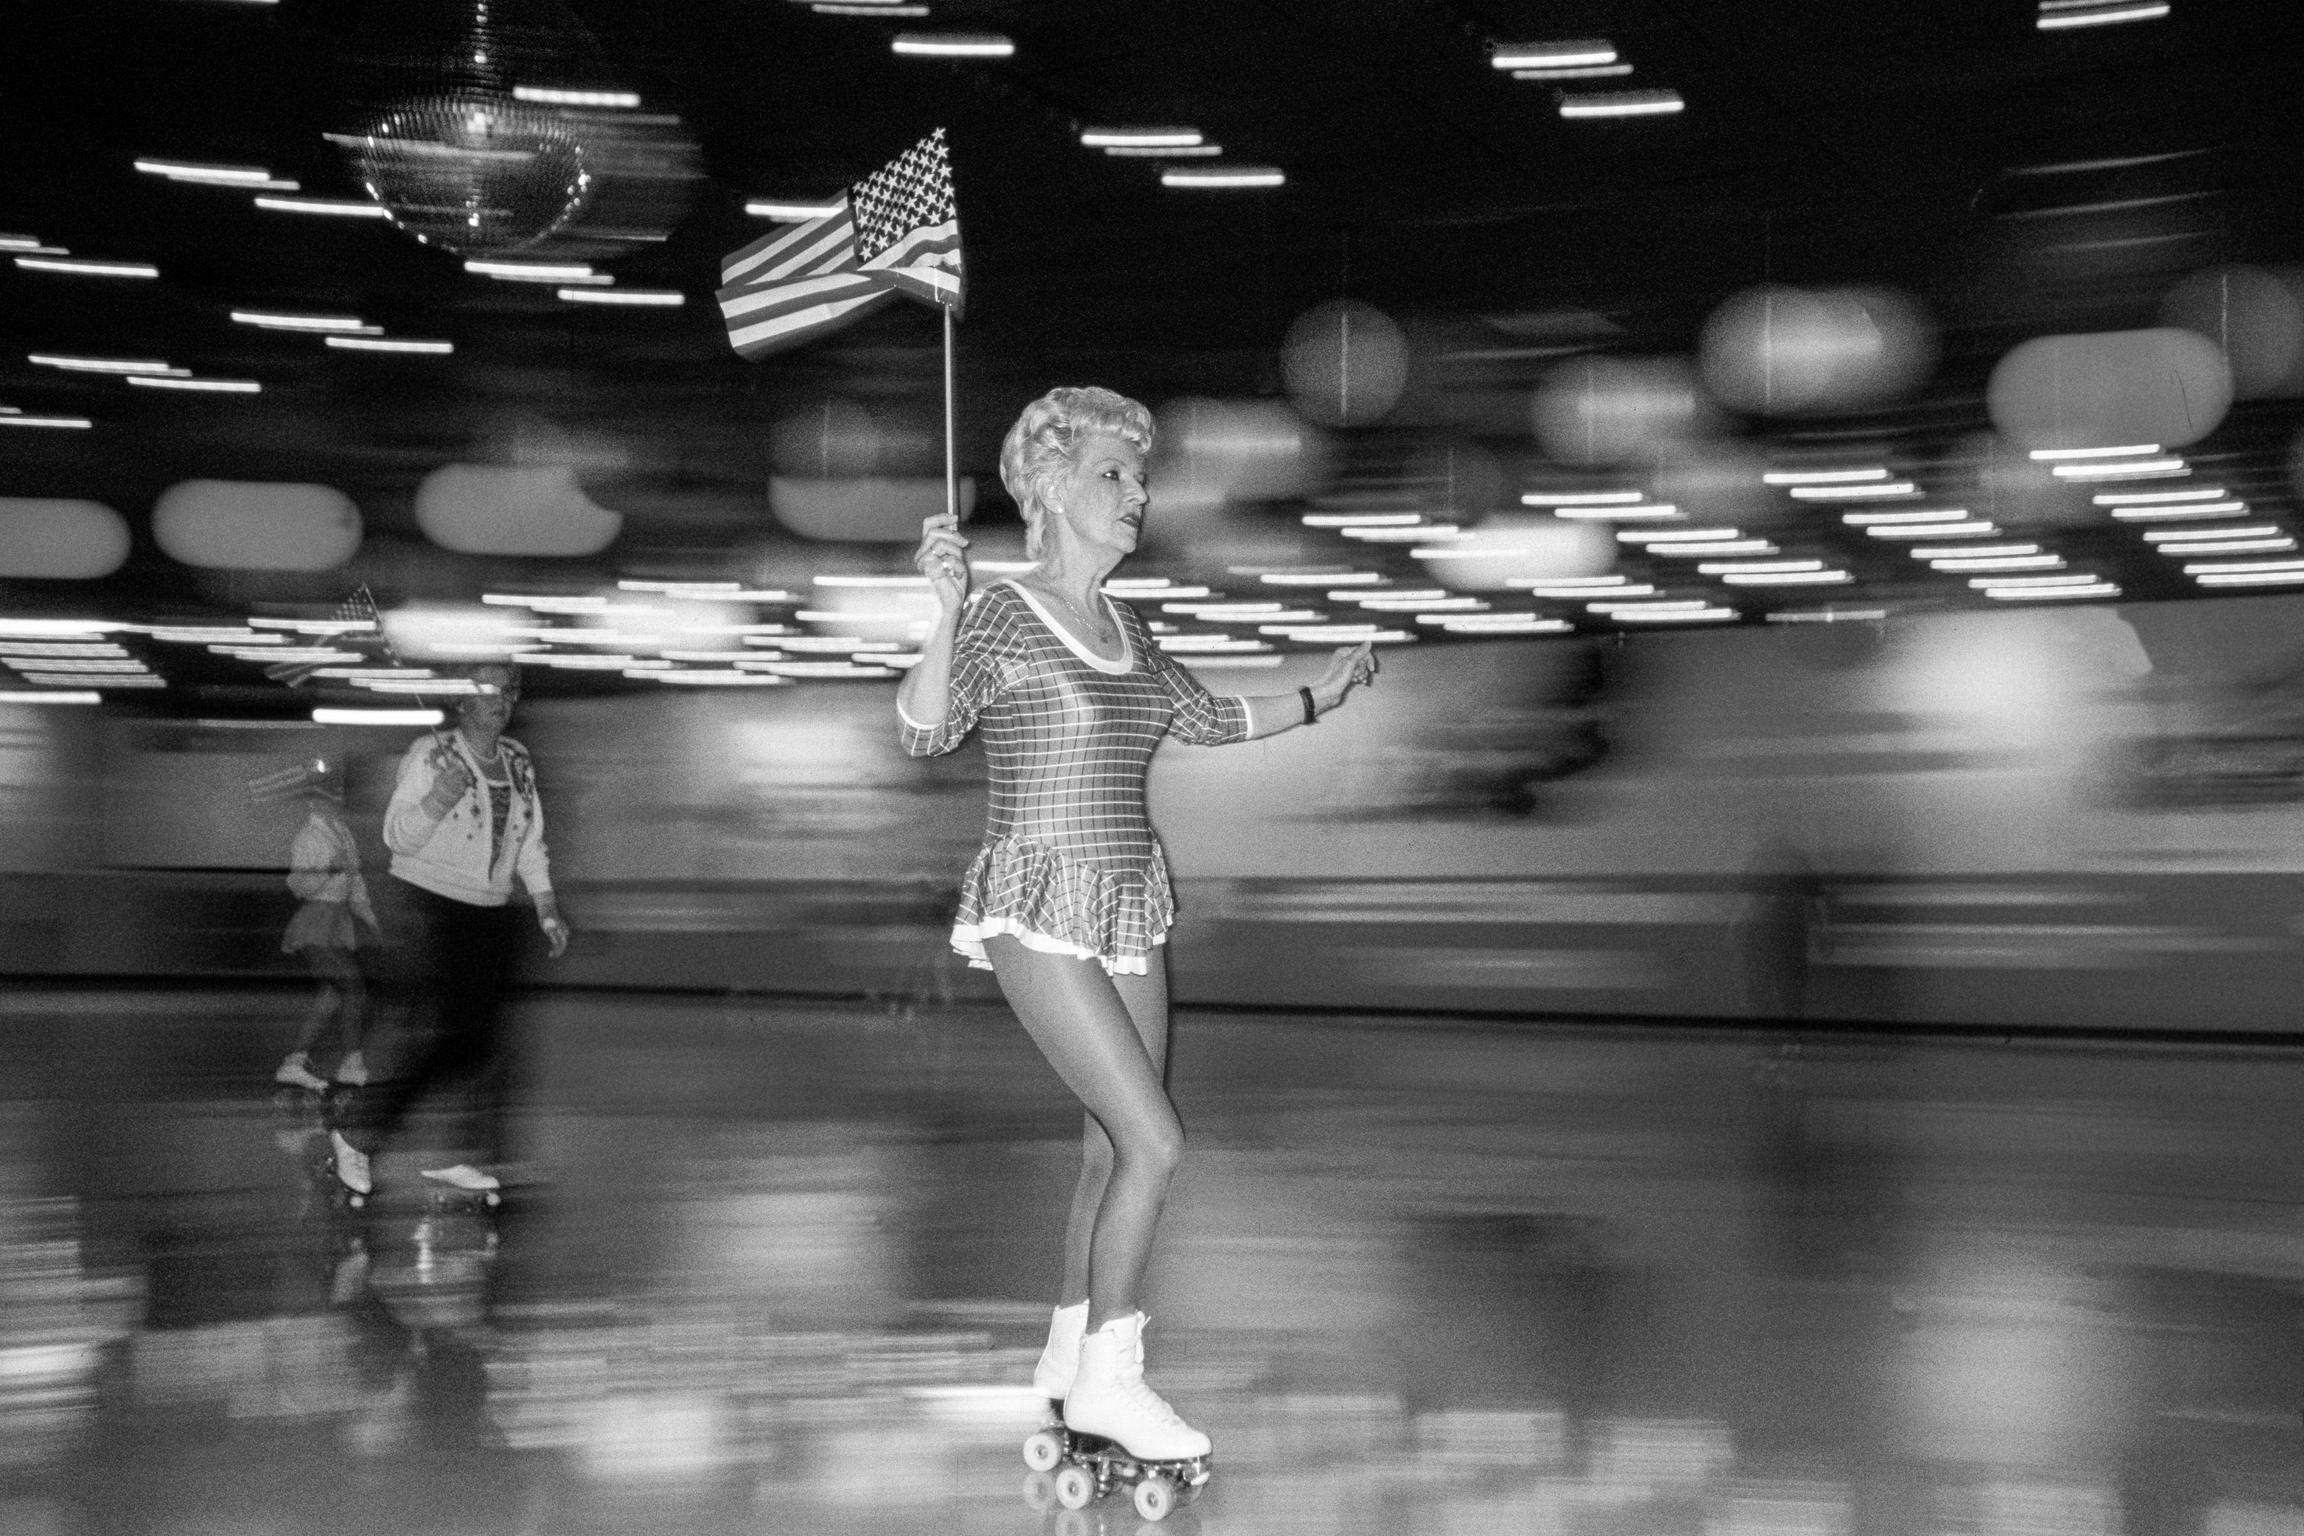 Over 60s night at the ‘Great Skate’ rink. Phoenix, Arizona USA